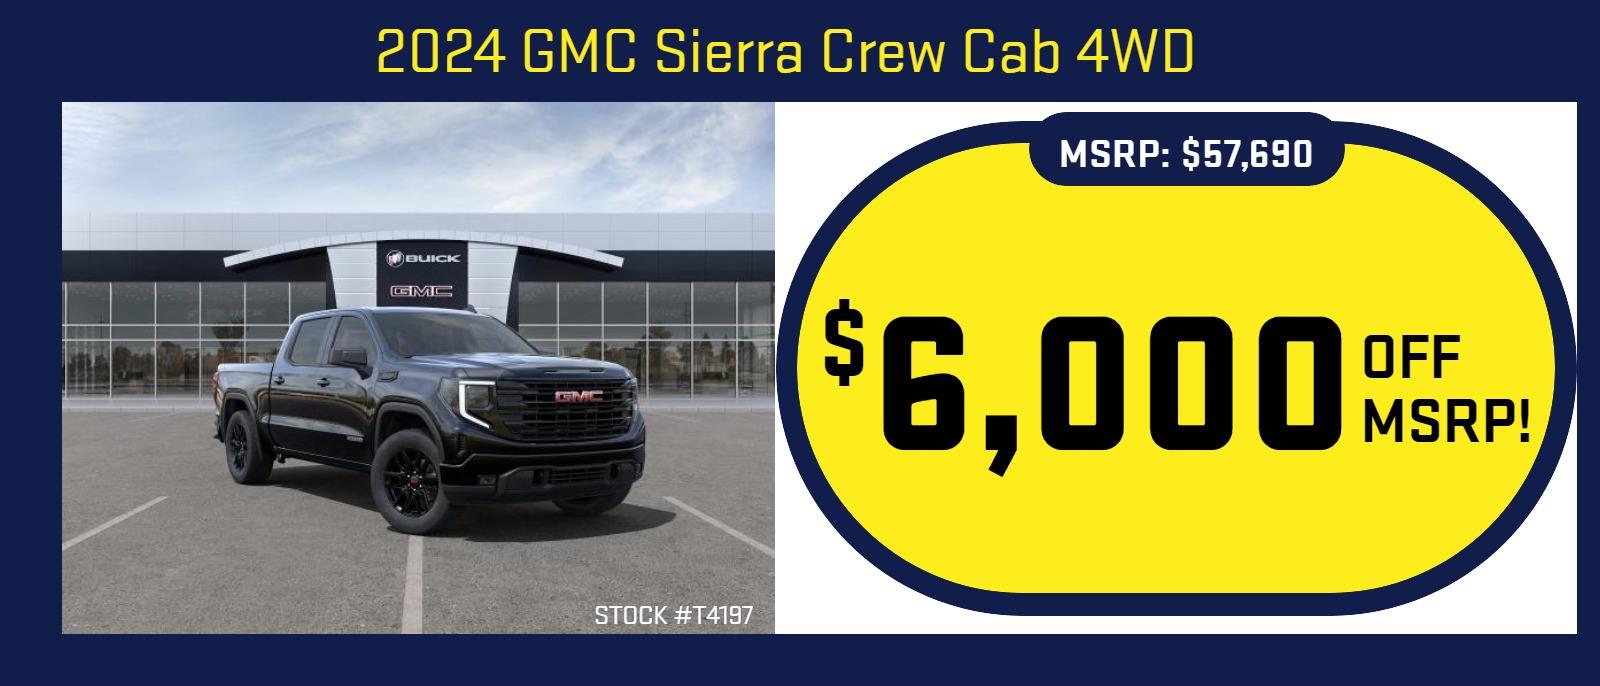 2023 GMC Sierra 4WD Crew Cab 
Stock #T4132
MSRP: $57,890
$6,000 OFF MSRP!